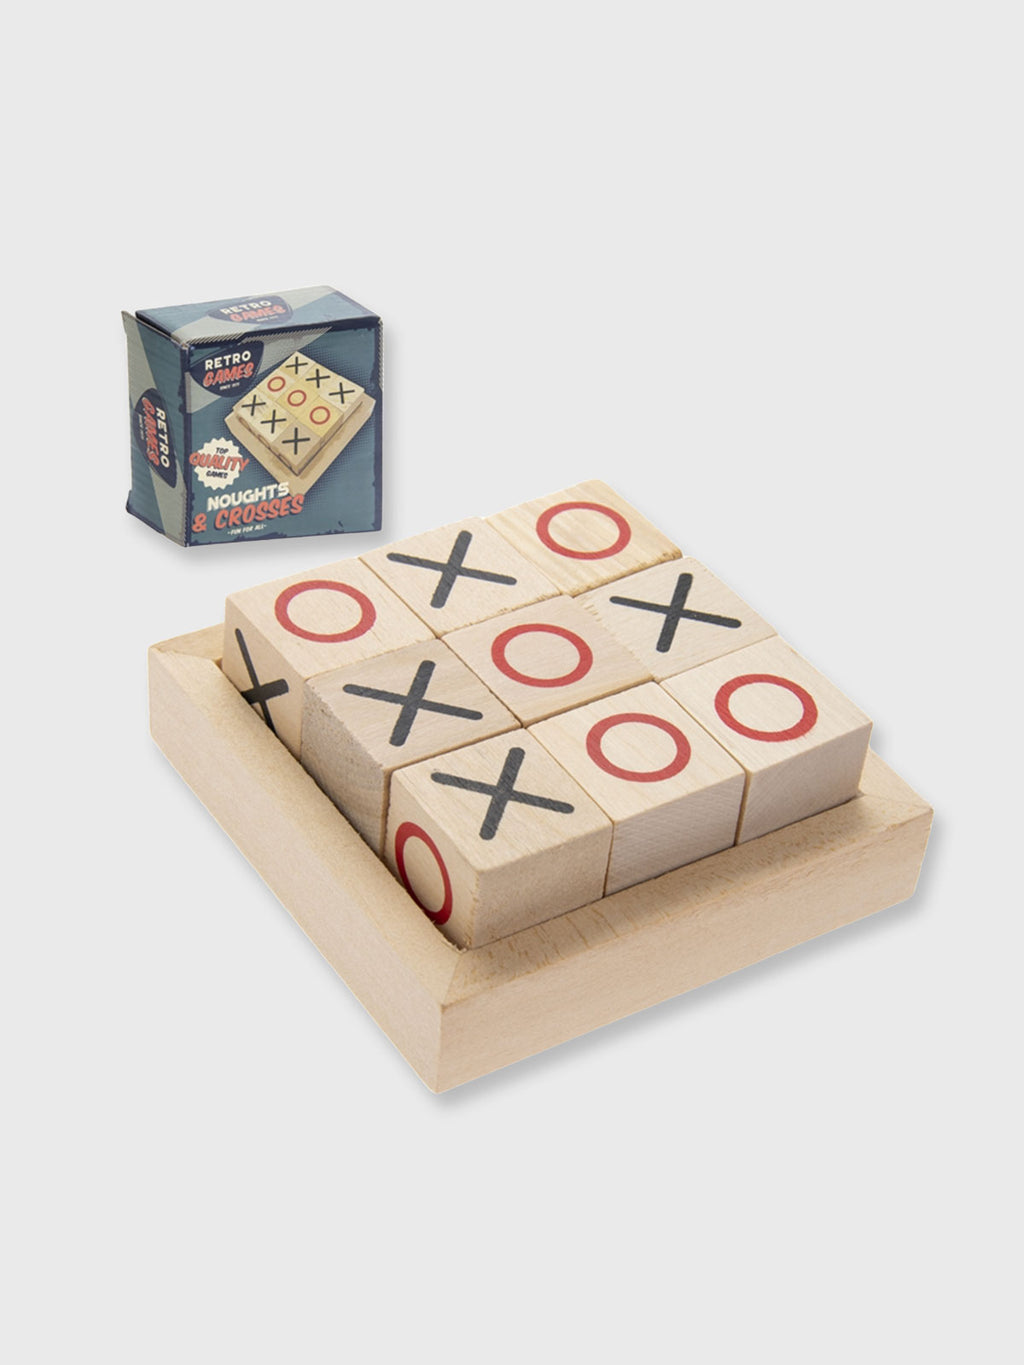 Retro Wooden Board Games - Noughts & Crosses